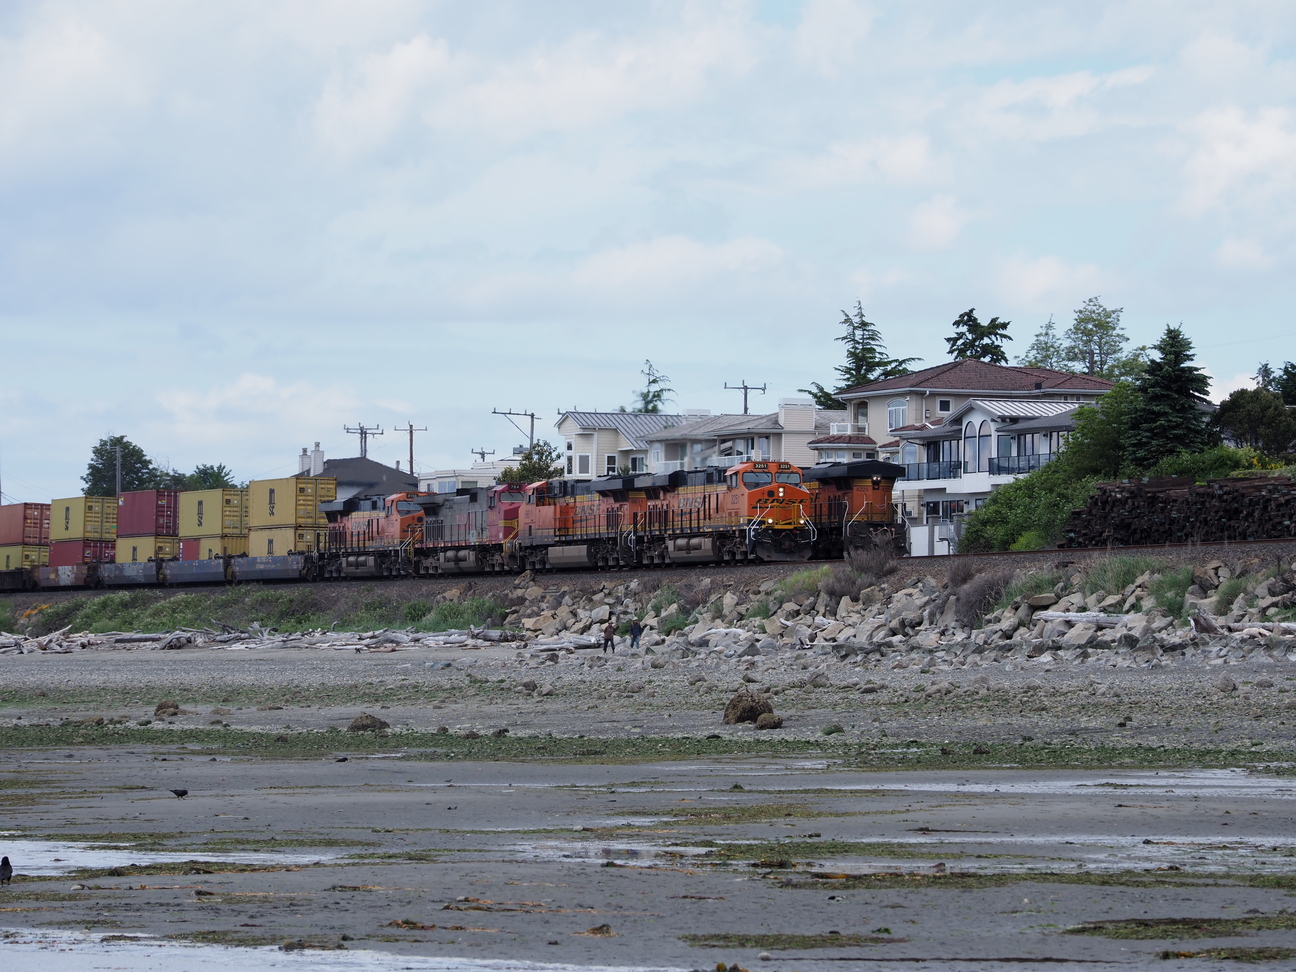 A BNSF freight train passing through Shoreline